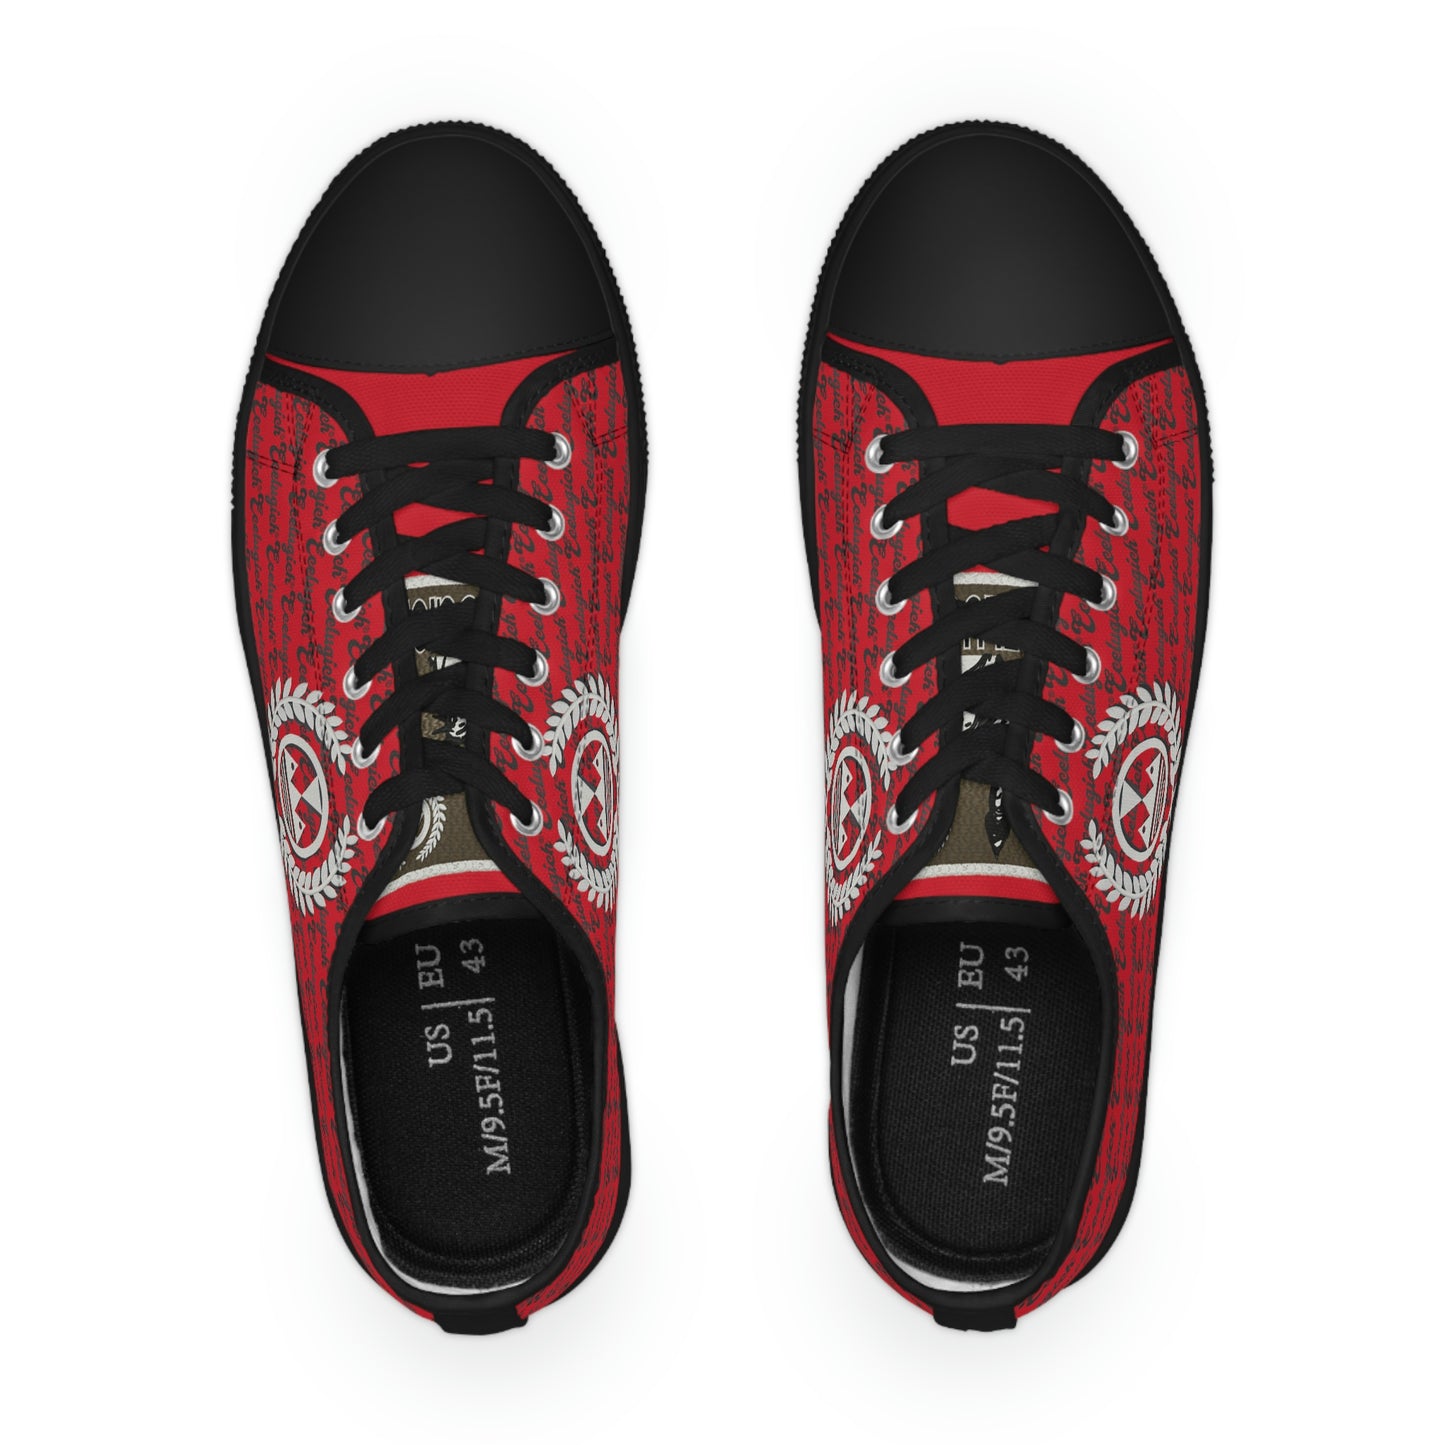 Ecelugich Red Men's Low Top Sneakers